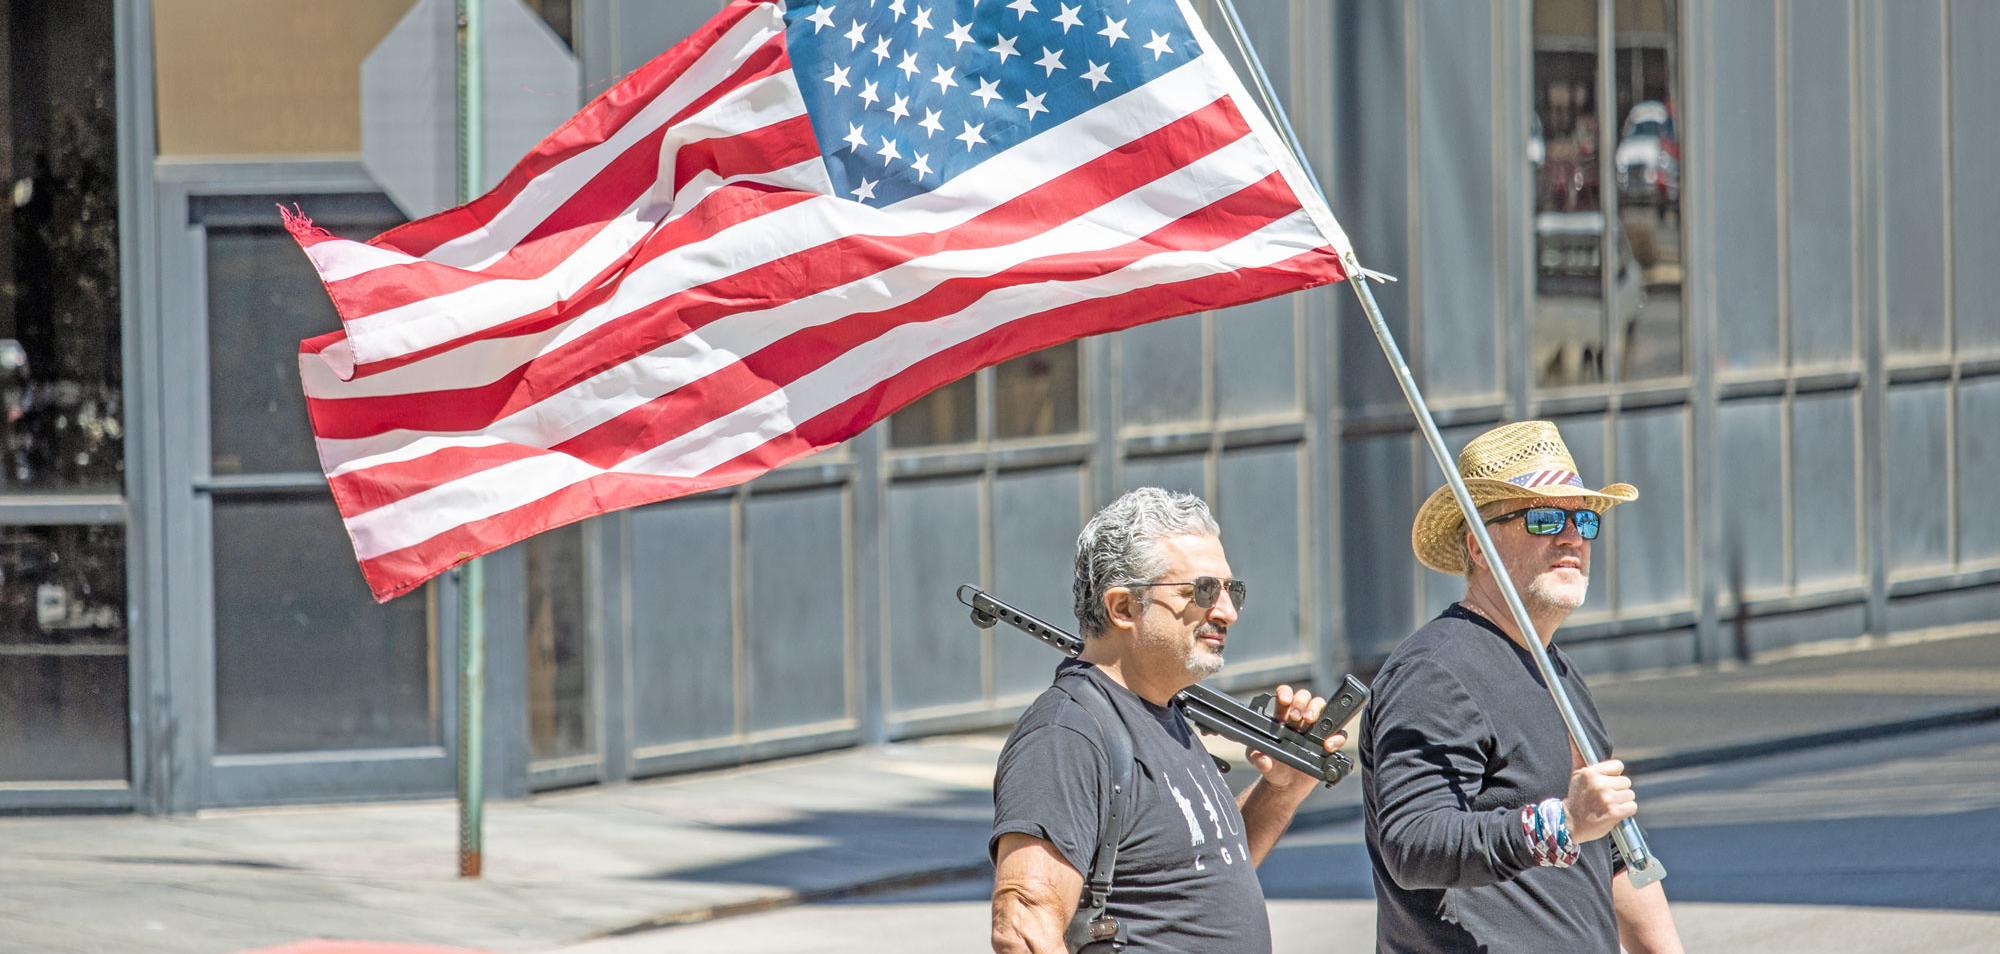 Coronavirus lockdown protestors hold American flag and gun, April 21, 2020 (Credit: Becker1999/flickr)